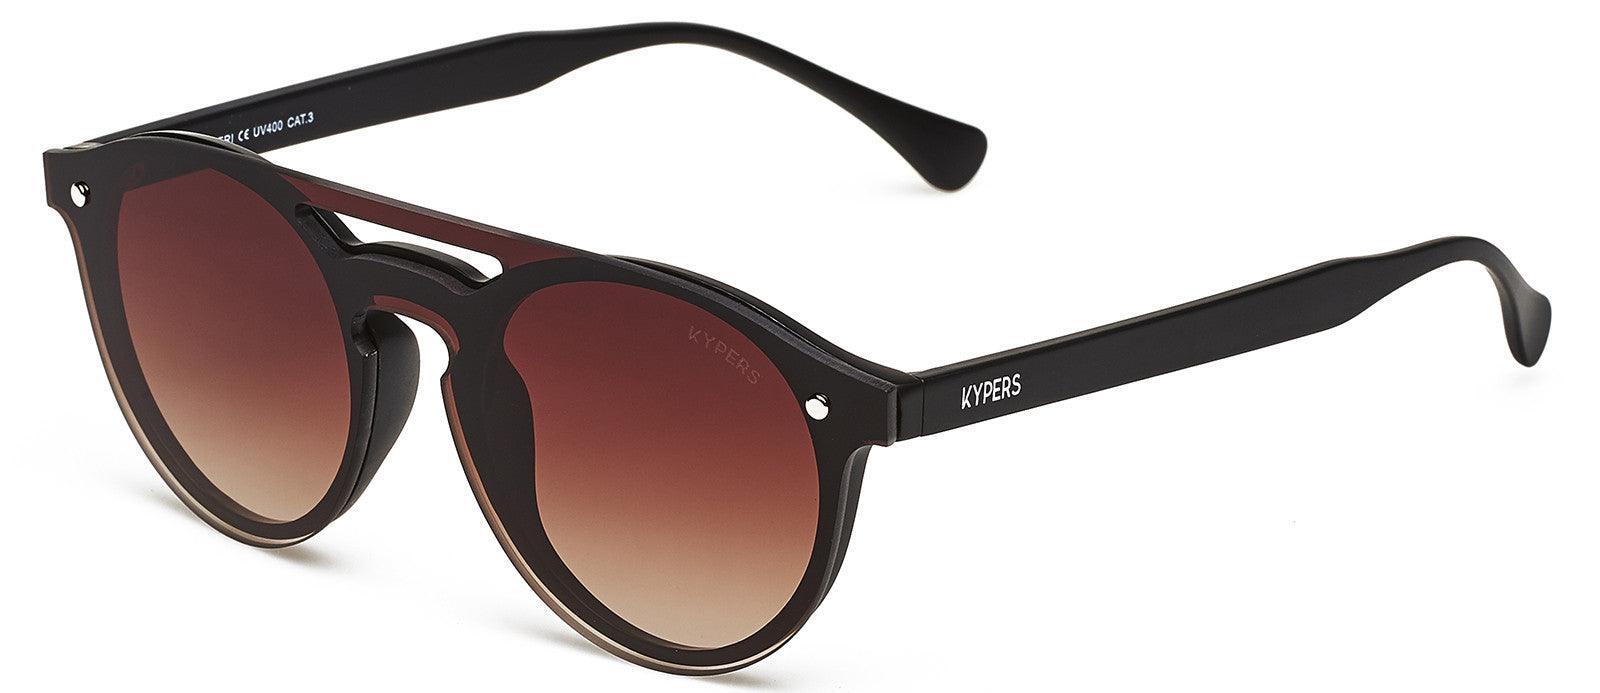 KYPERS sunglasses model GERI GR002 with black frame and gradient brown & blue lens